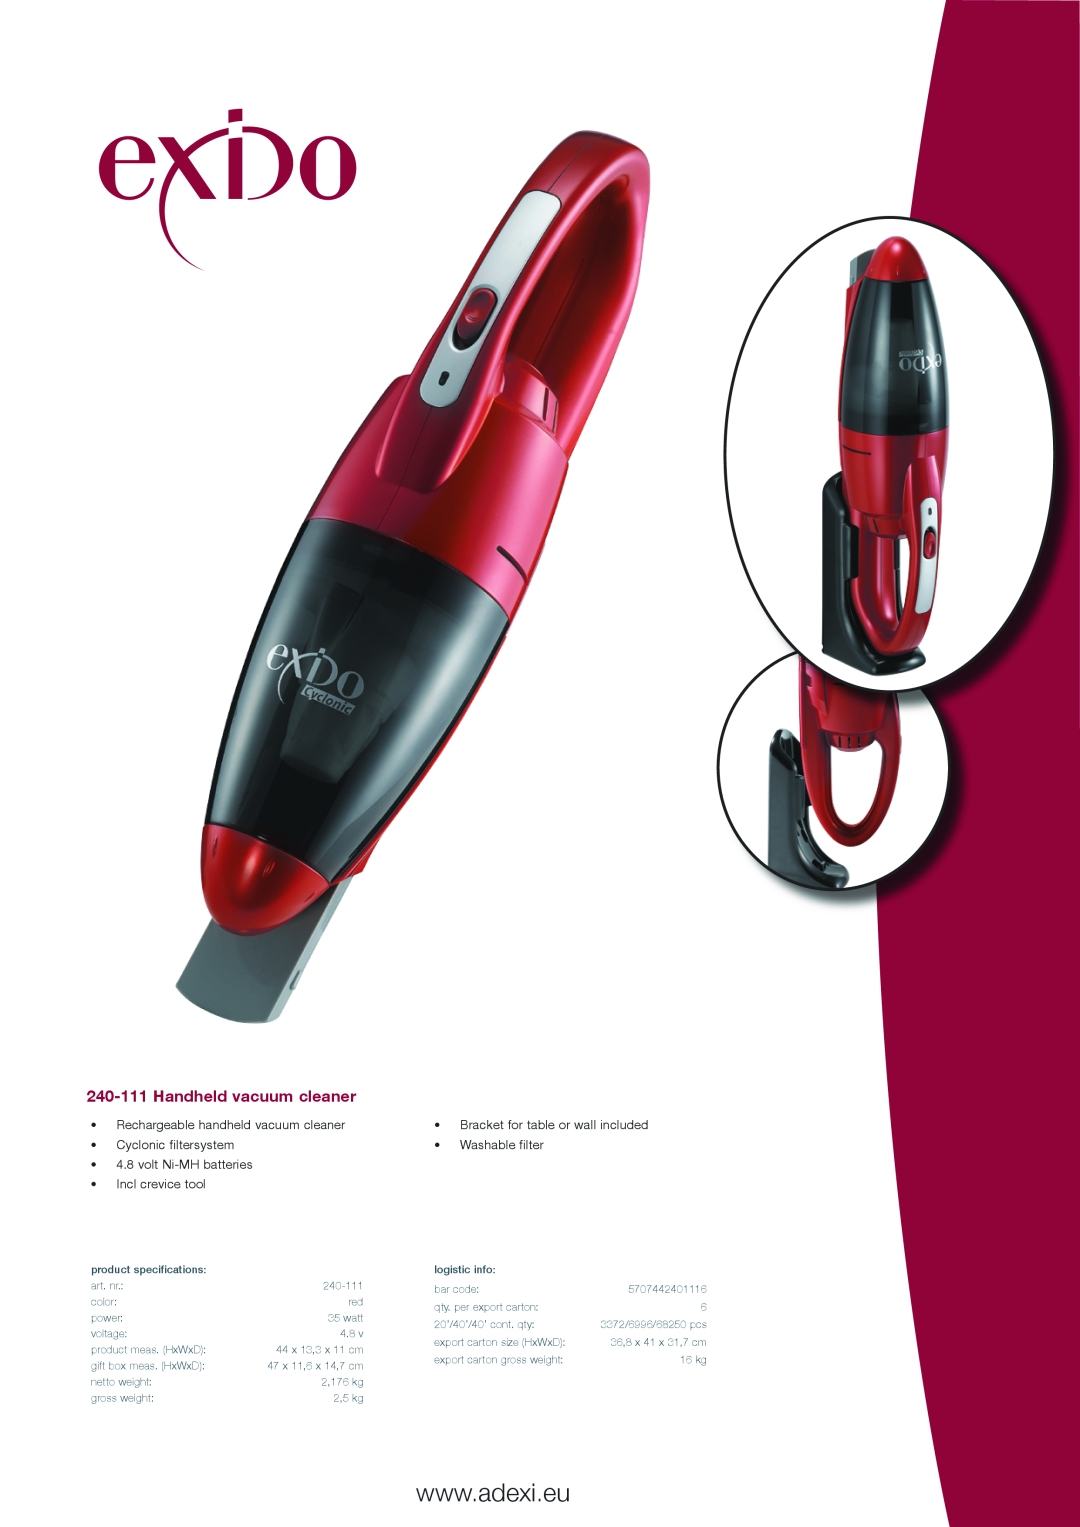 Melissa specifications 240-111Handheld vacuum cleaner, Rechargeable handheld vacuum cleaner, Incl crevice tool 